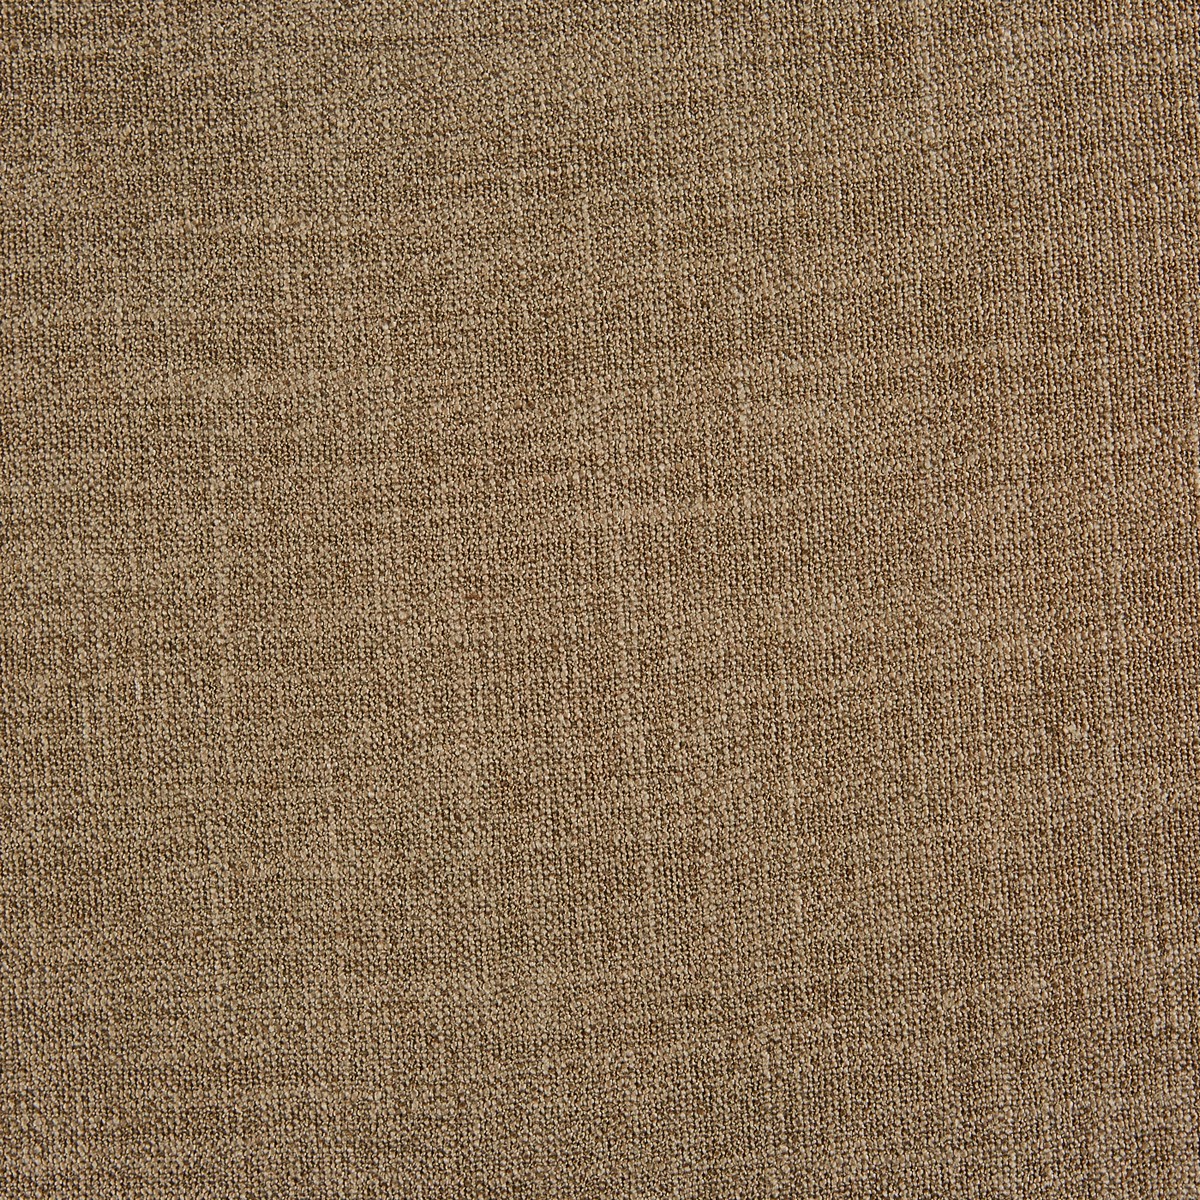 Whisp Earth Fabric by Prestigious Textiles